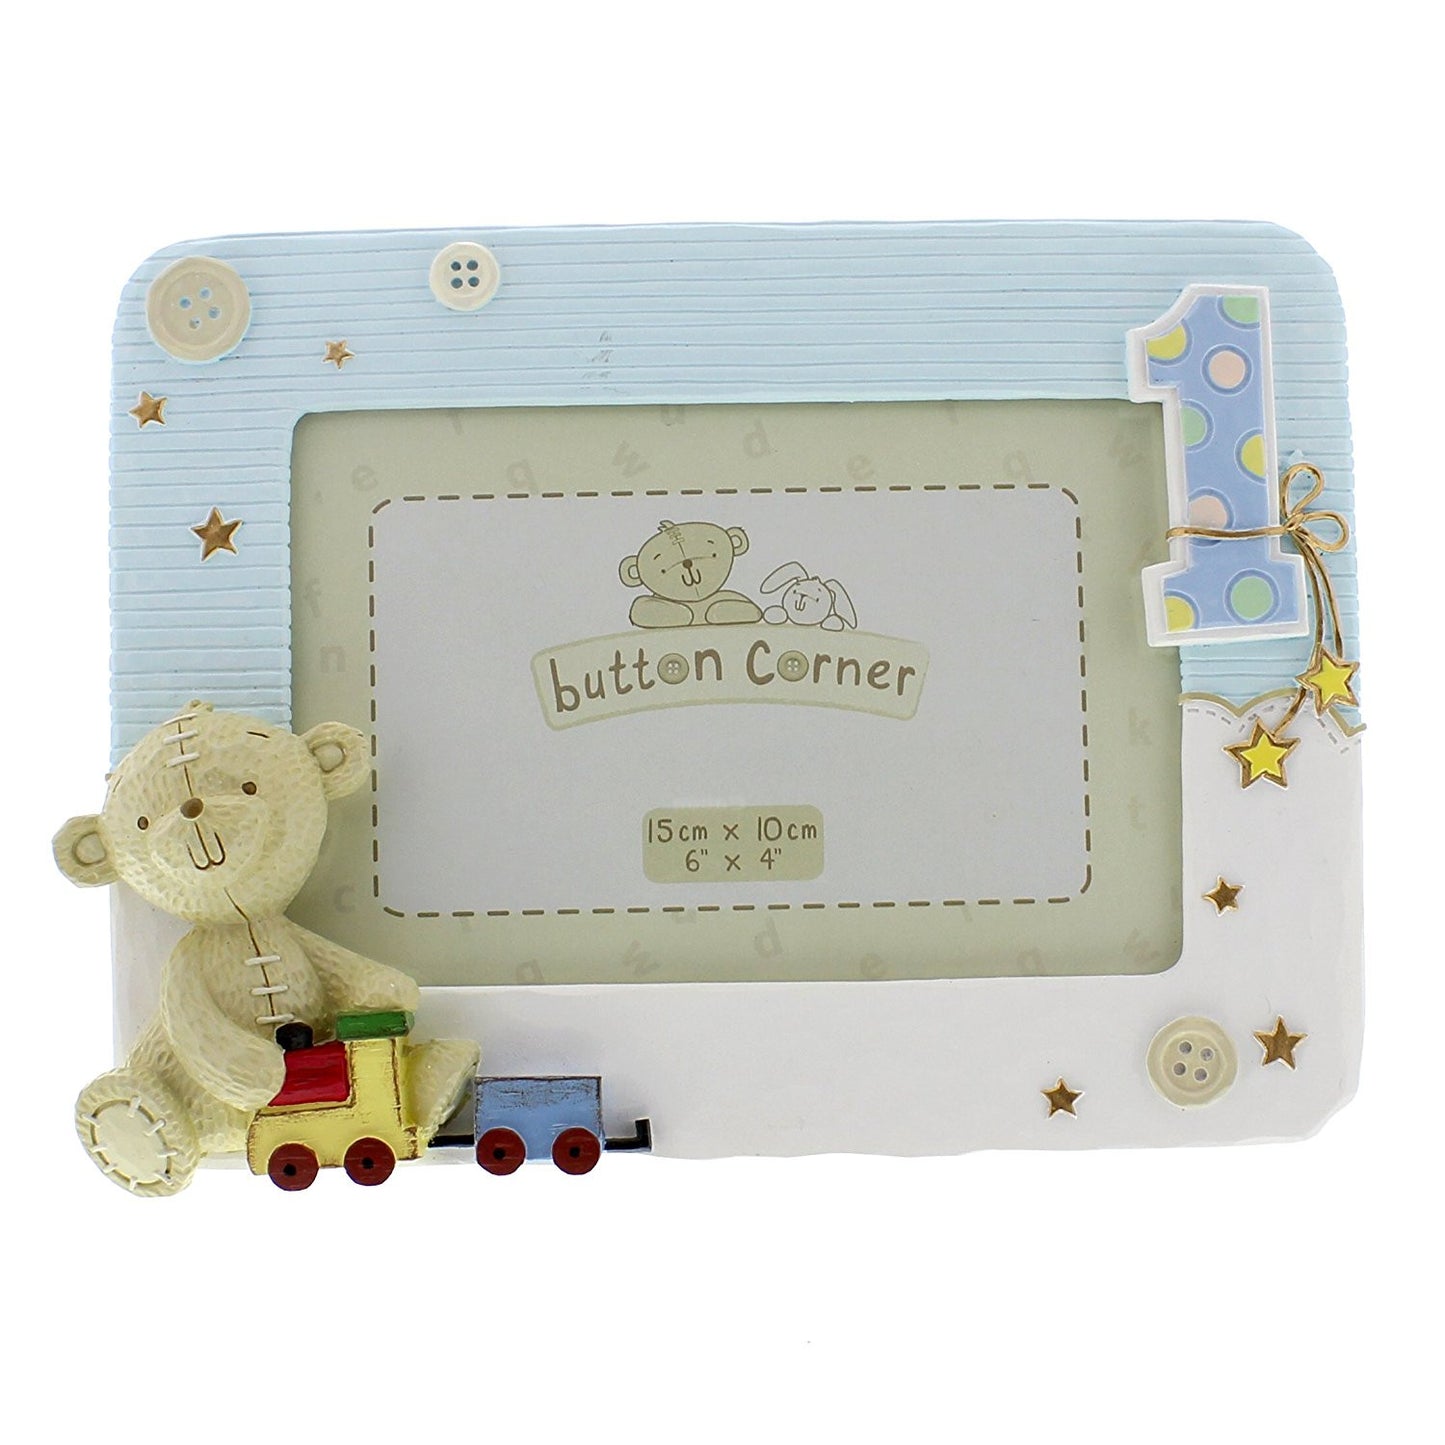 Button Corner 1st Birthday Blue Resin Photo Frame - Baby Boy frame with teddy - hanrattycraftsgifts.co.uk